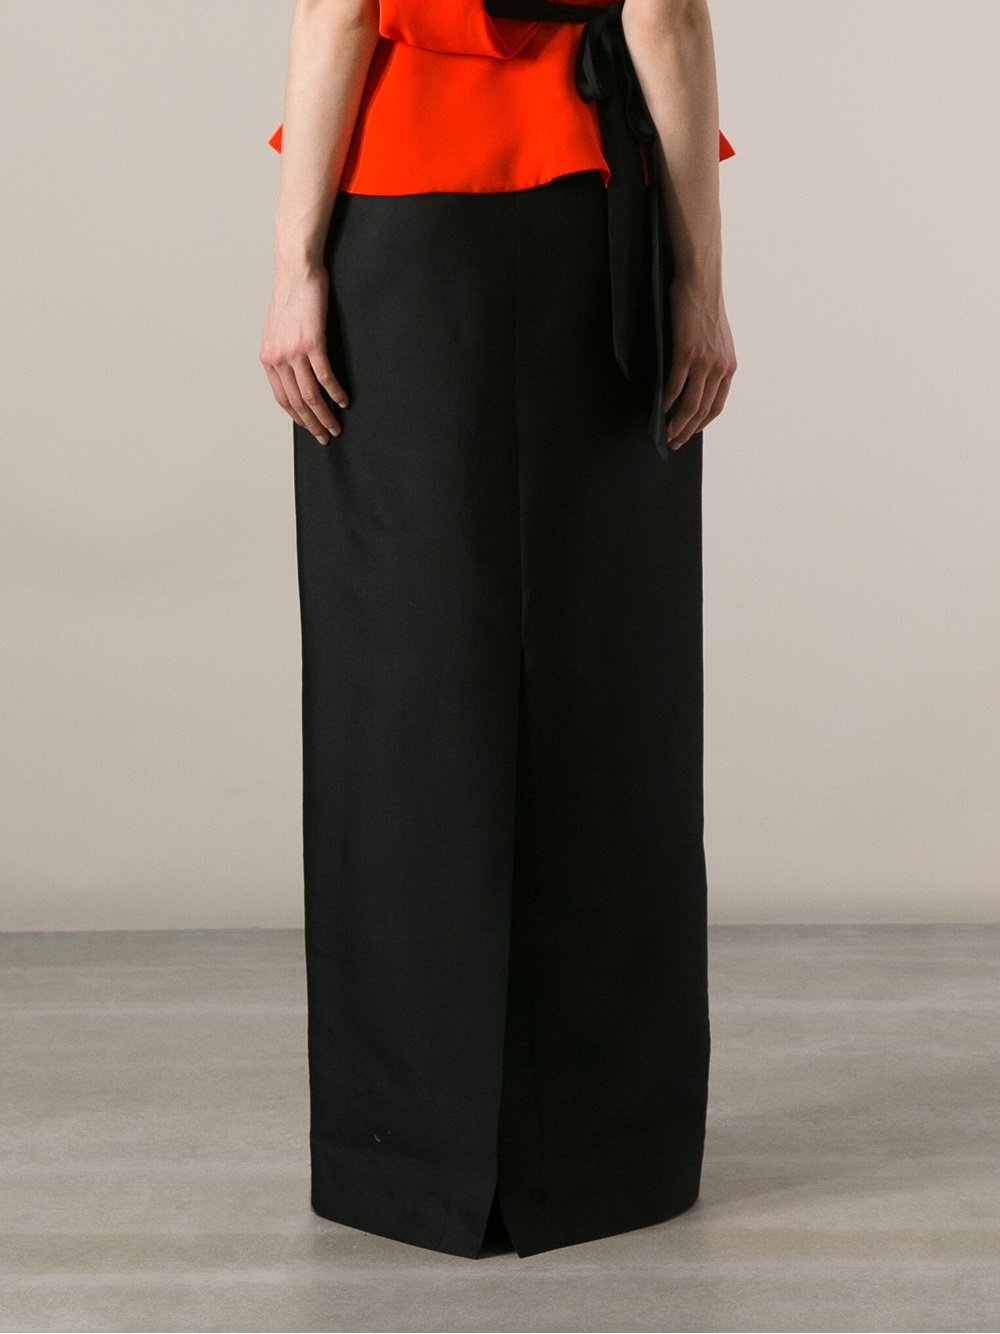 Raoul Long Pencil Skirt in Black | Lyst